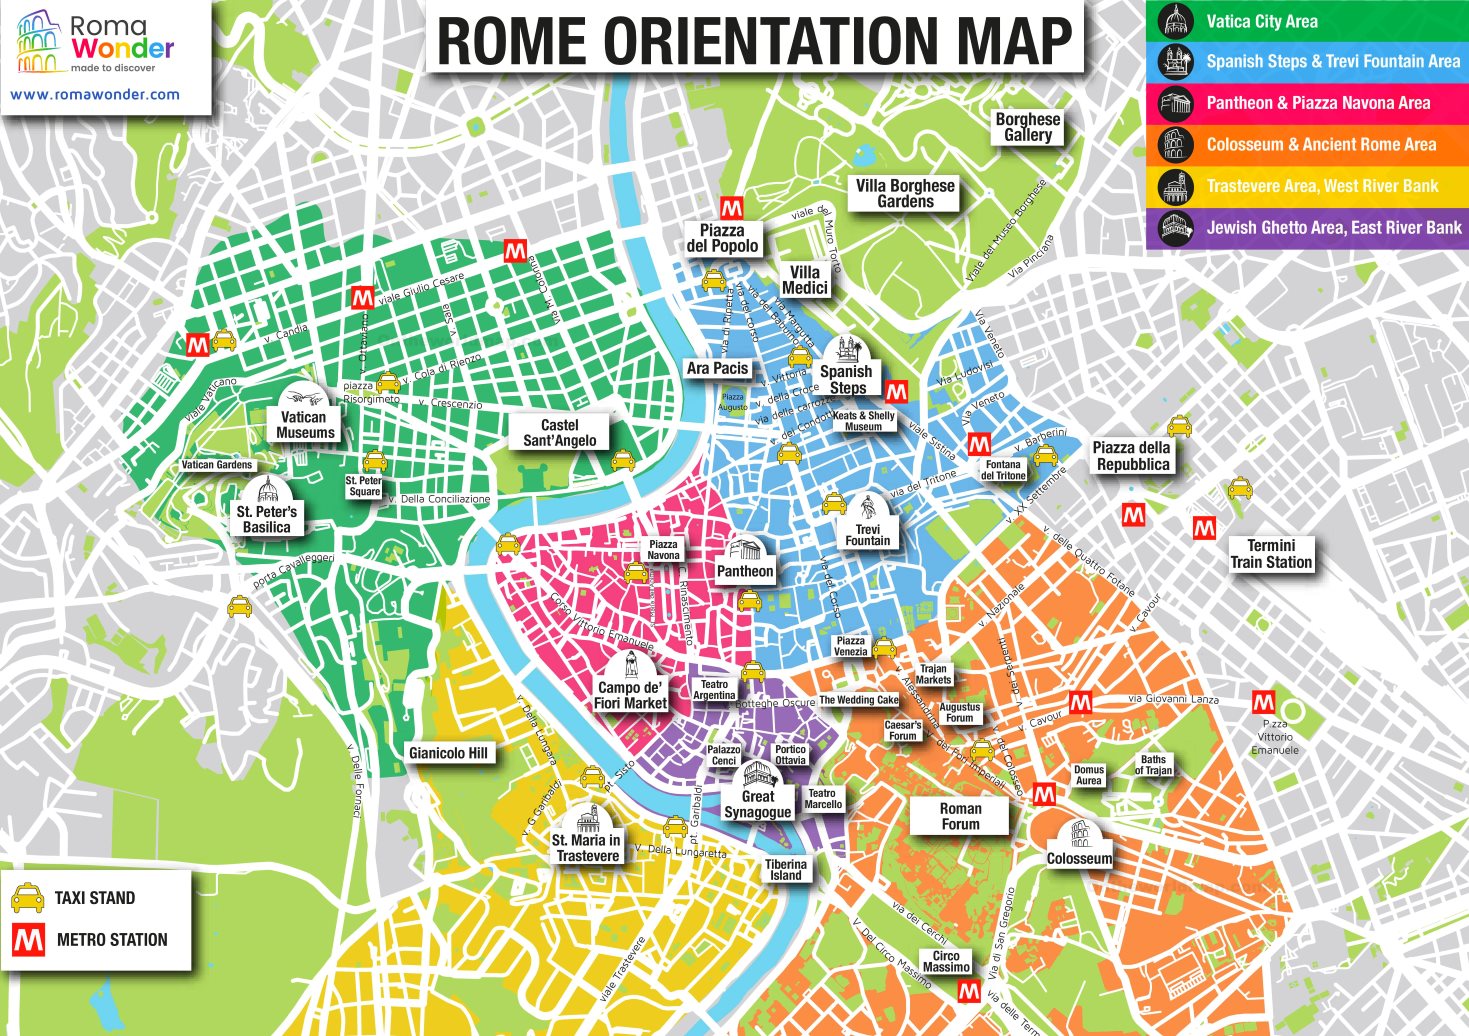 tourist-attractions-of-rome-tourist-destination-in-the-world